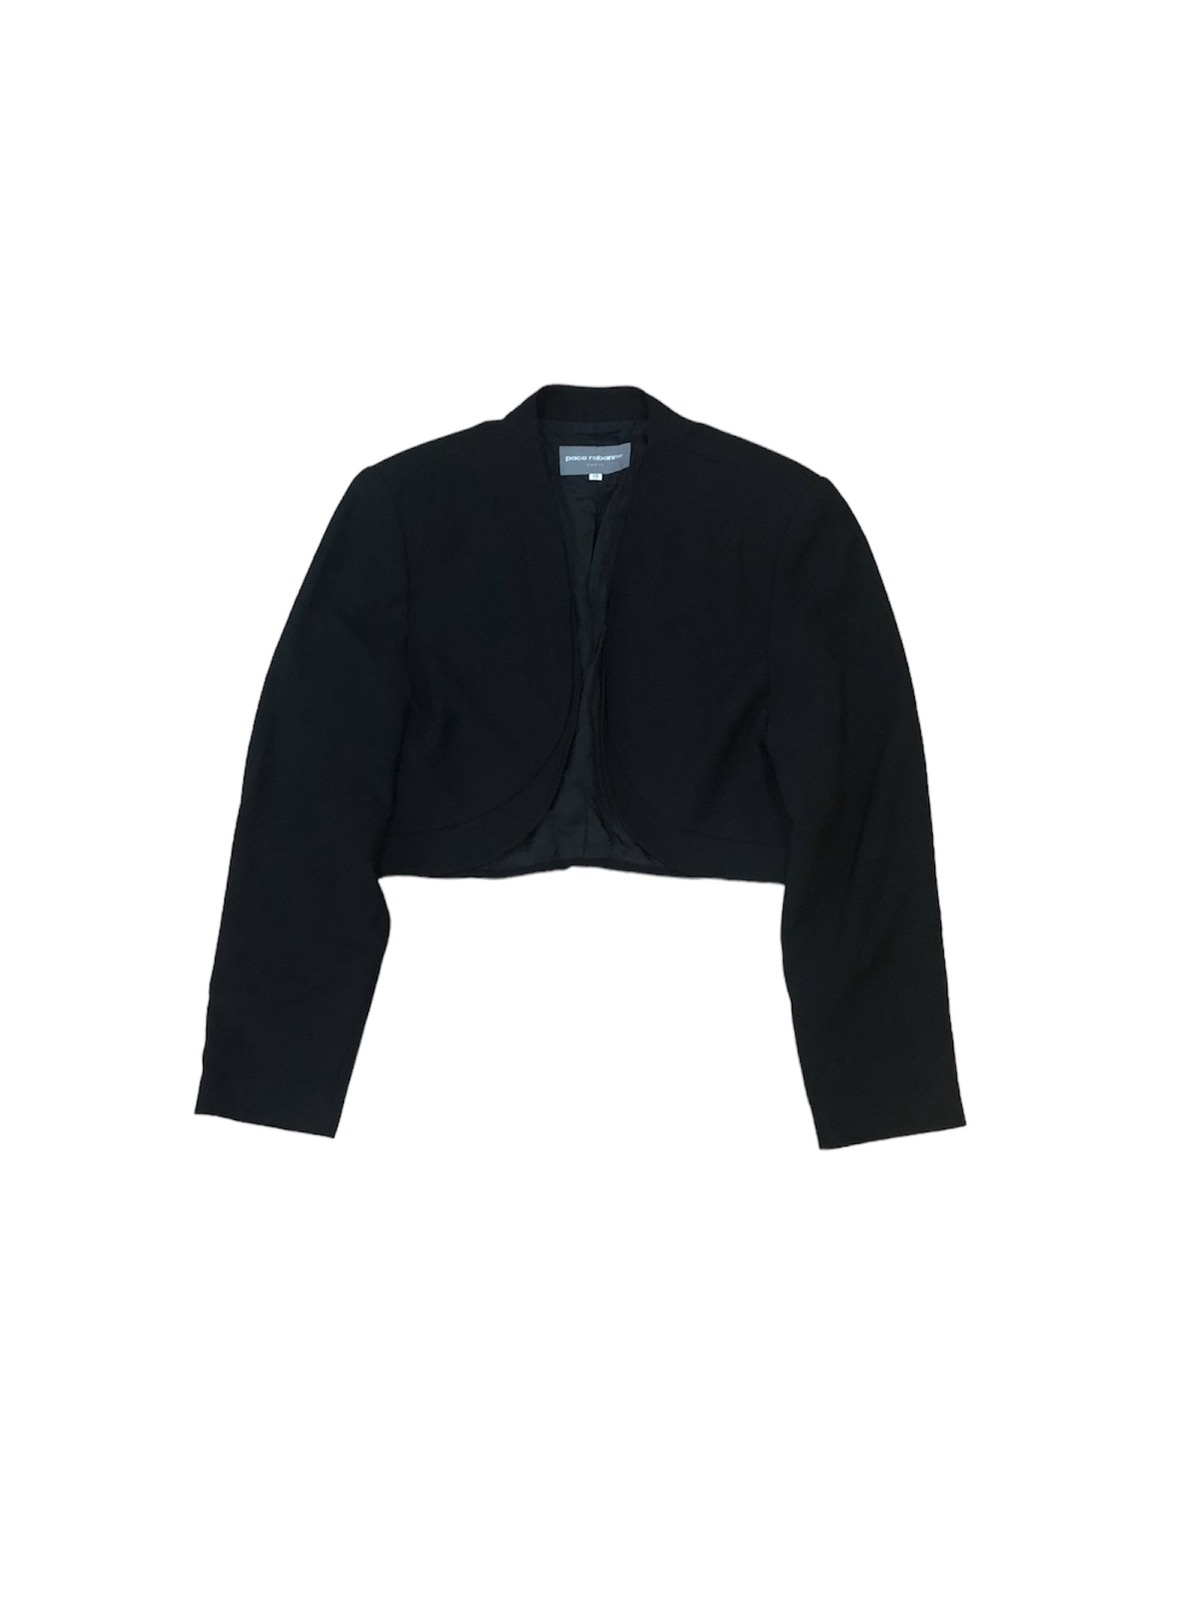 Archive Paco Rabbane crop jacket - 1